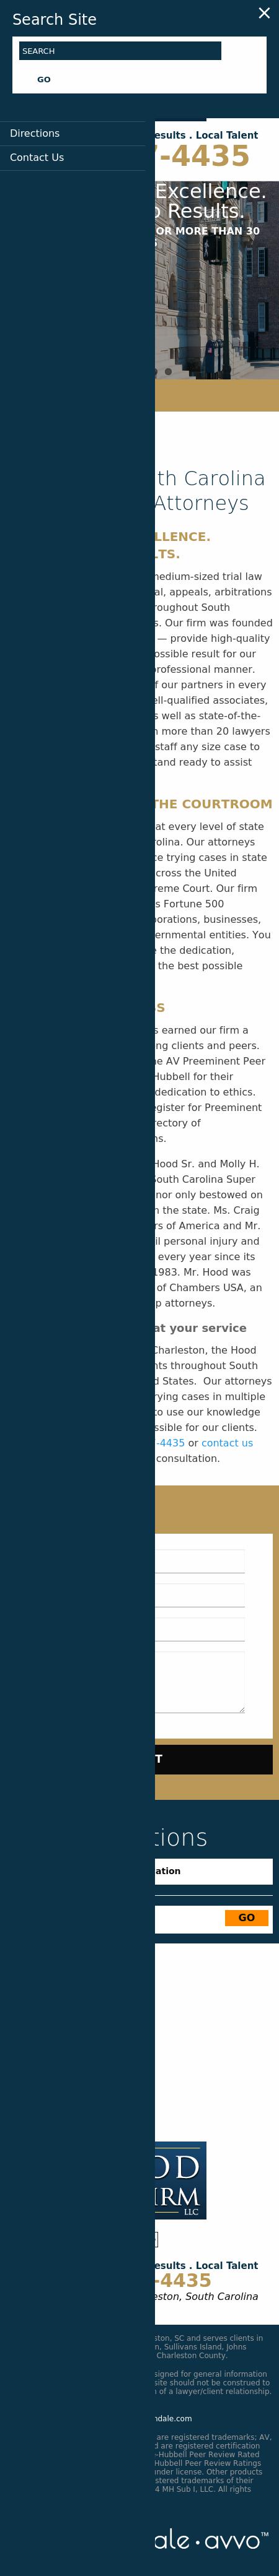 Hood Law Firm, LLC - Charleston SC Lawyers